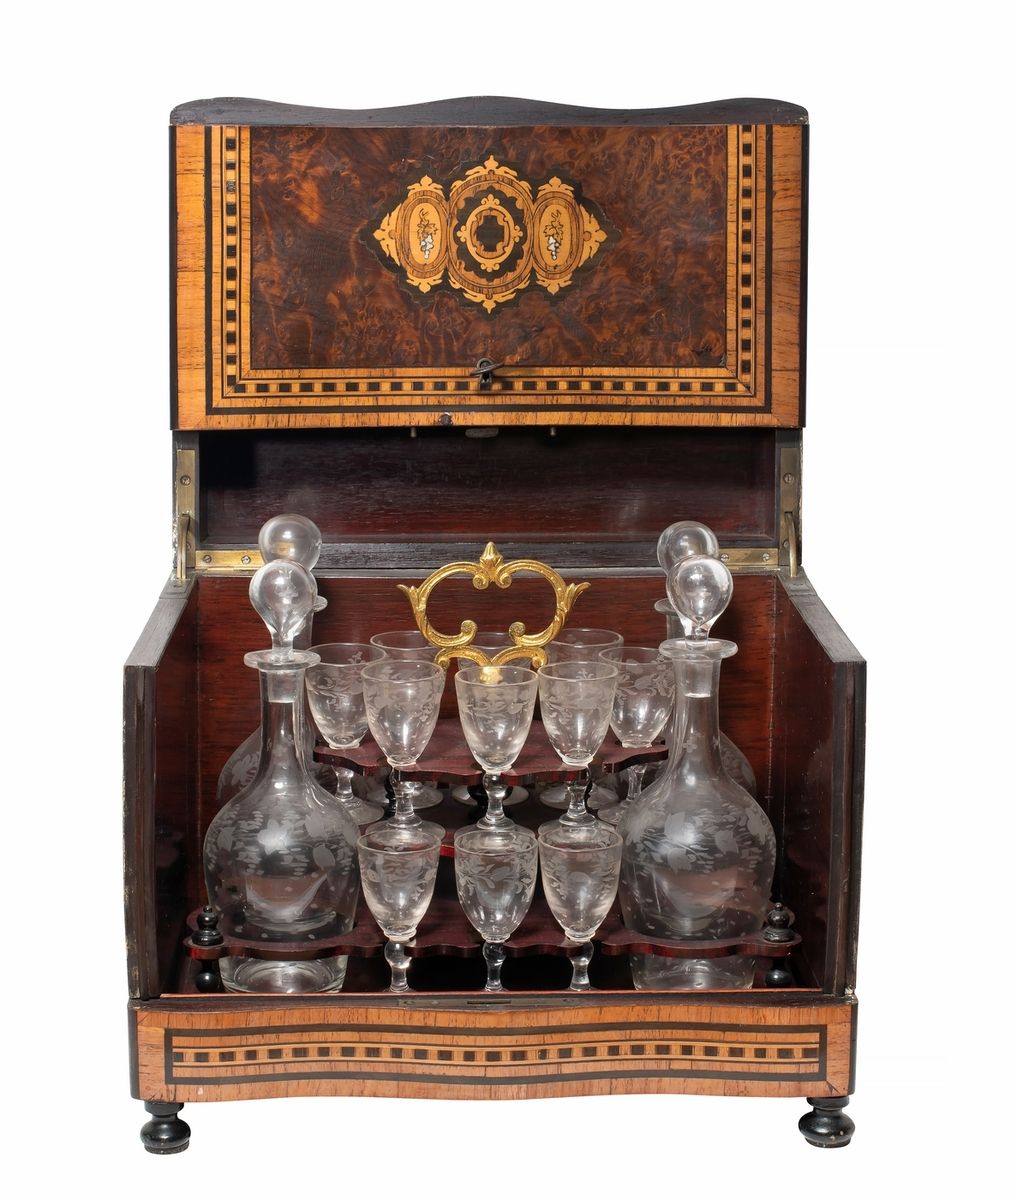 Null 珍贵的木头和珍珠母镶嵌酒盒，有4个酒杯和14个雕刻玻璃杯
拿破仑三世时期的作品
27,5 x 32,5 x 24,5厘米
(两个玻璃杯丢失，一个玻璃杯&hellip;